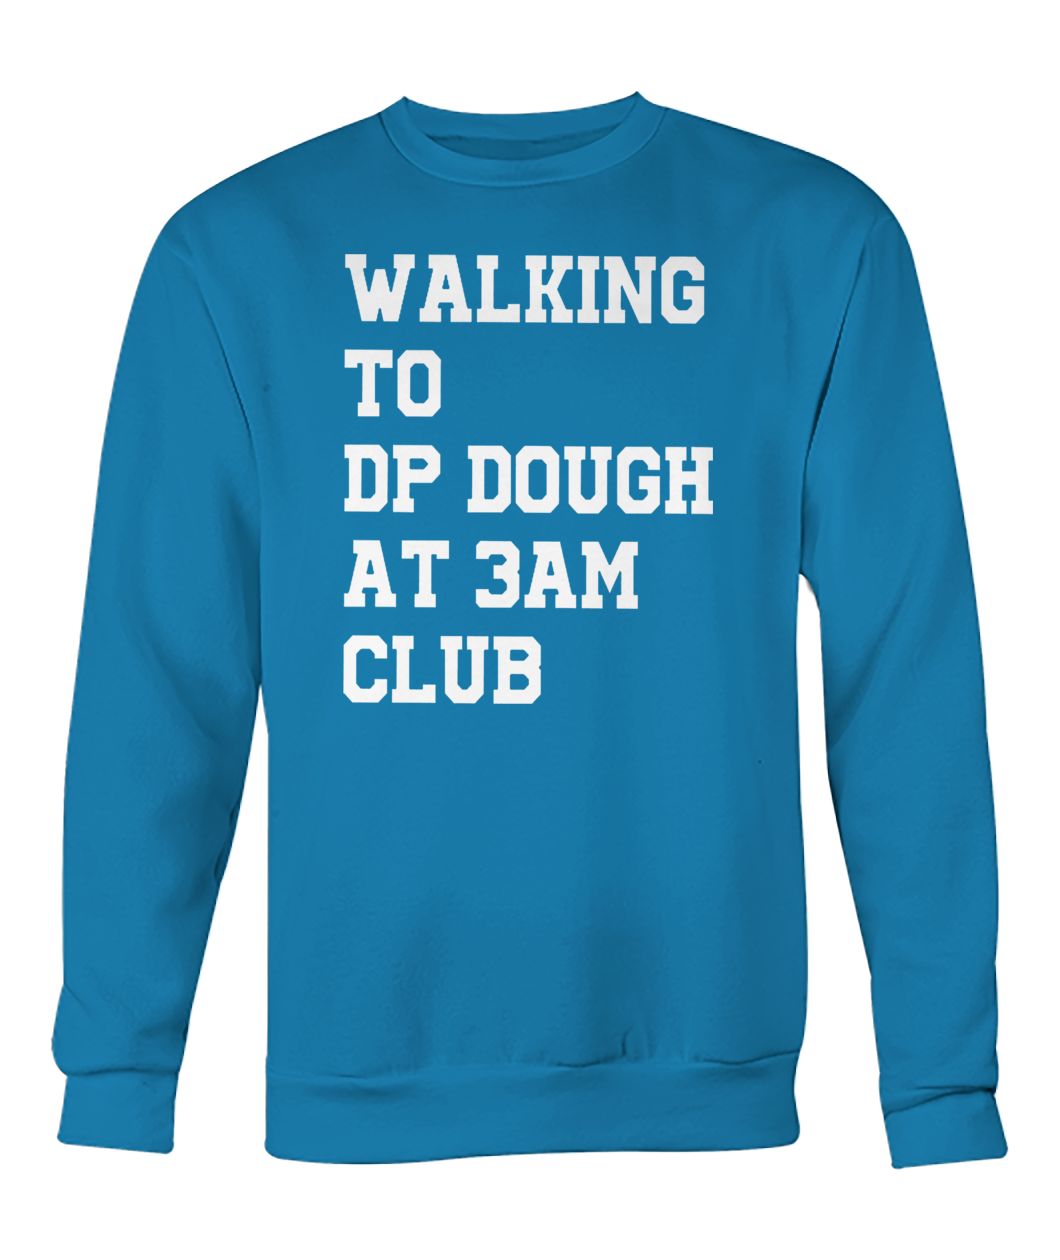 Walking to DP dough at 3am club crew neck sweatshirt